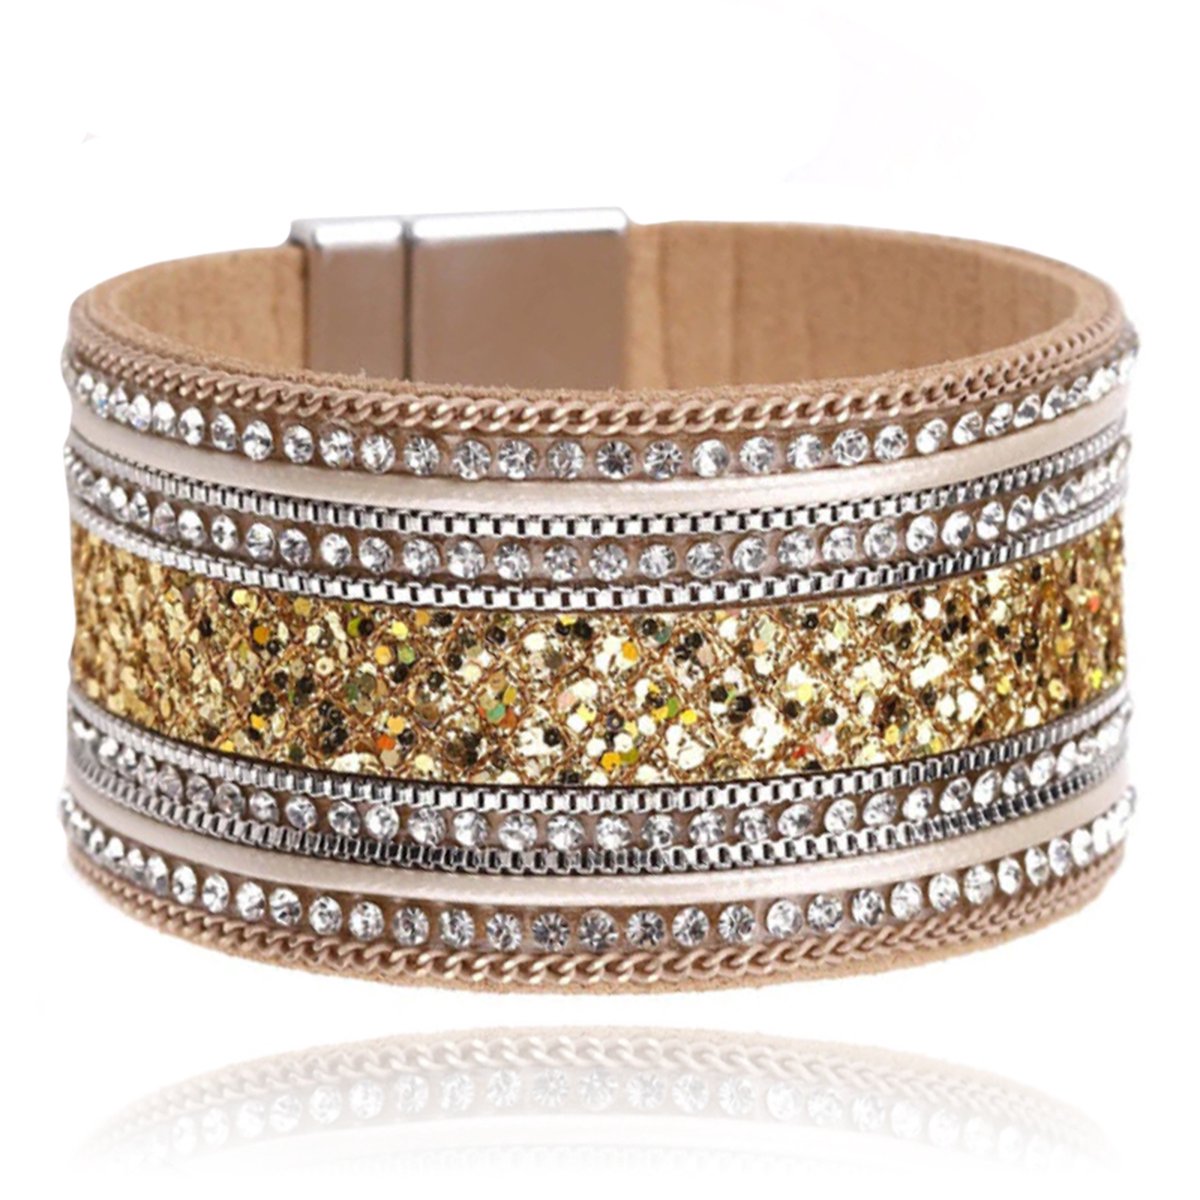 Kaki brede dames armband met kristallen Bohemian stijl